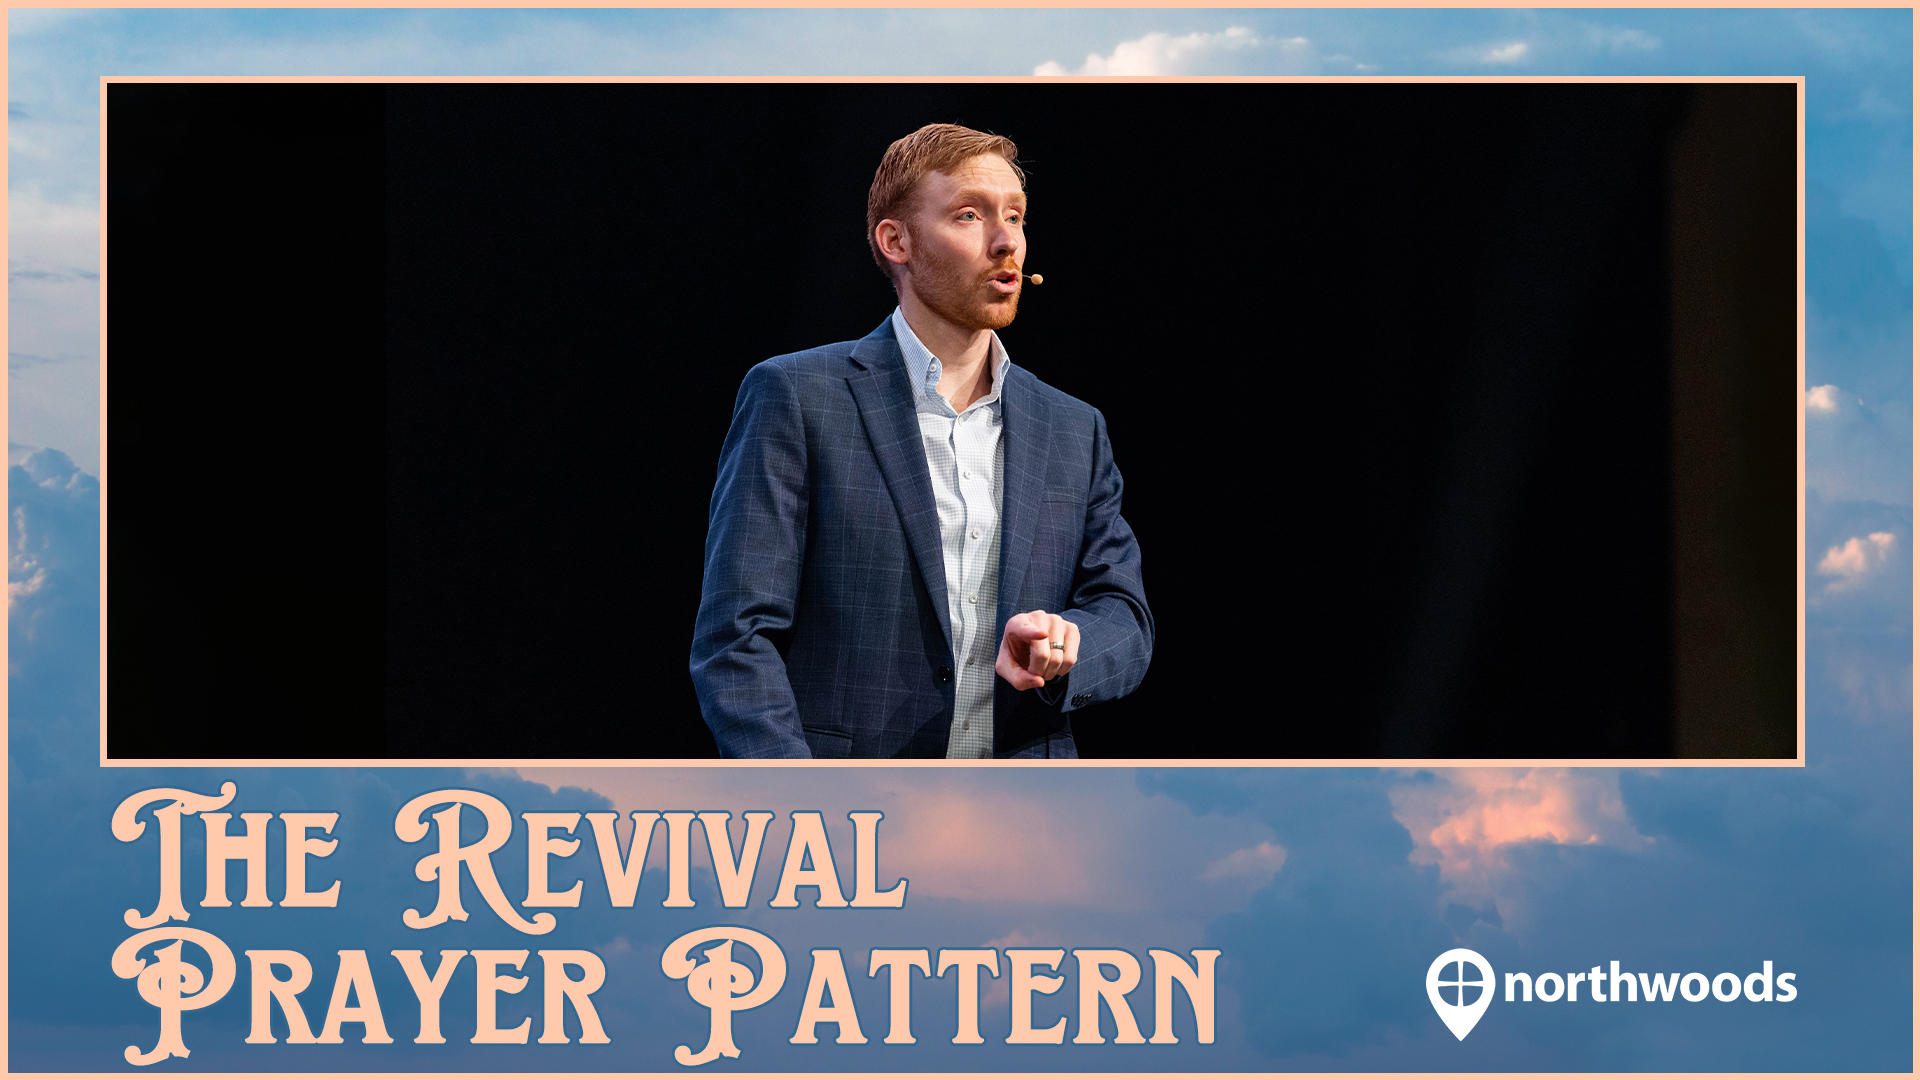 The Revival Prayer Pattern